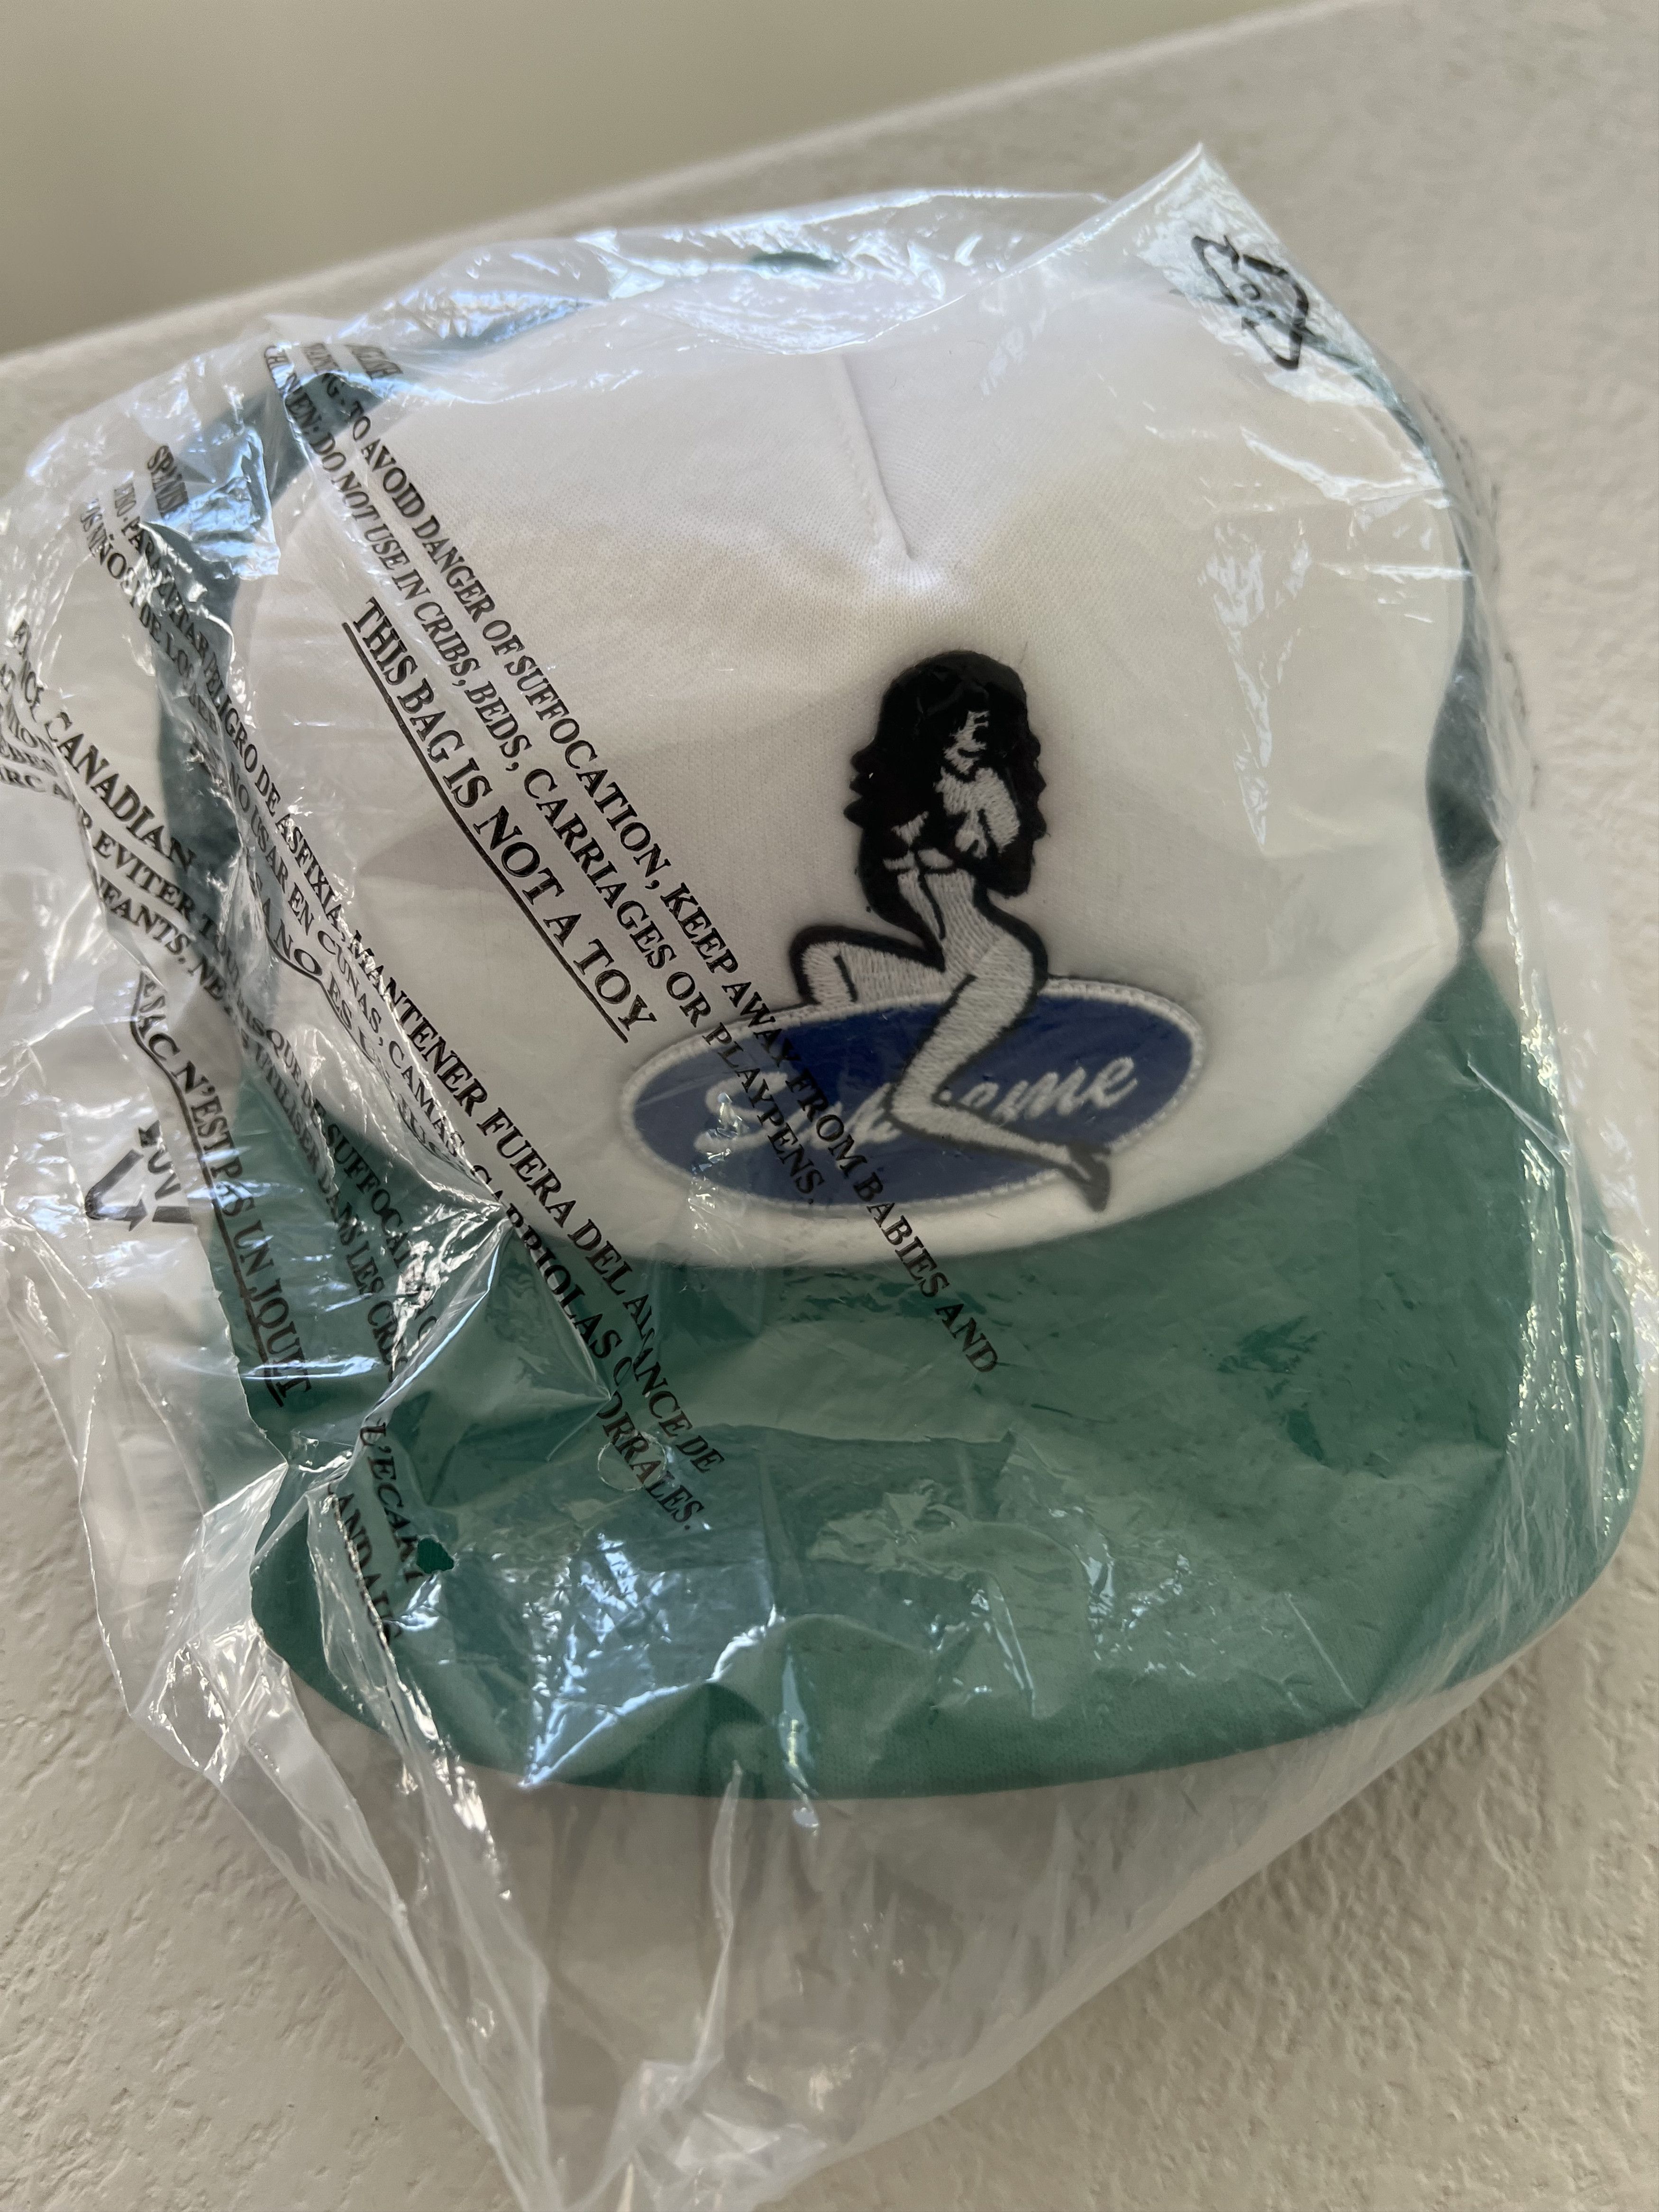 Supreme - Pinup Logo Trucker Hat (Green) – eluXive